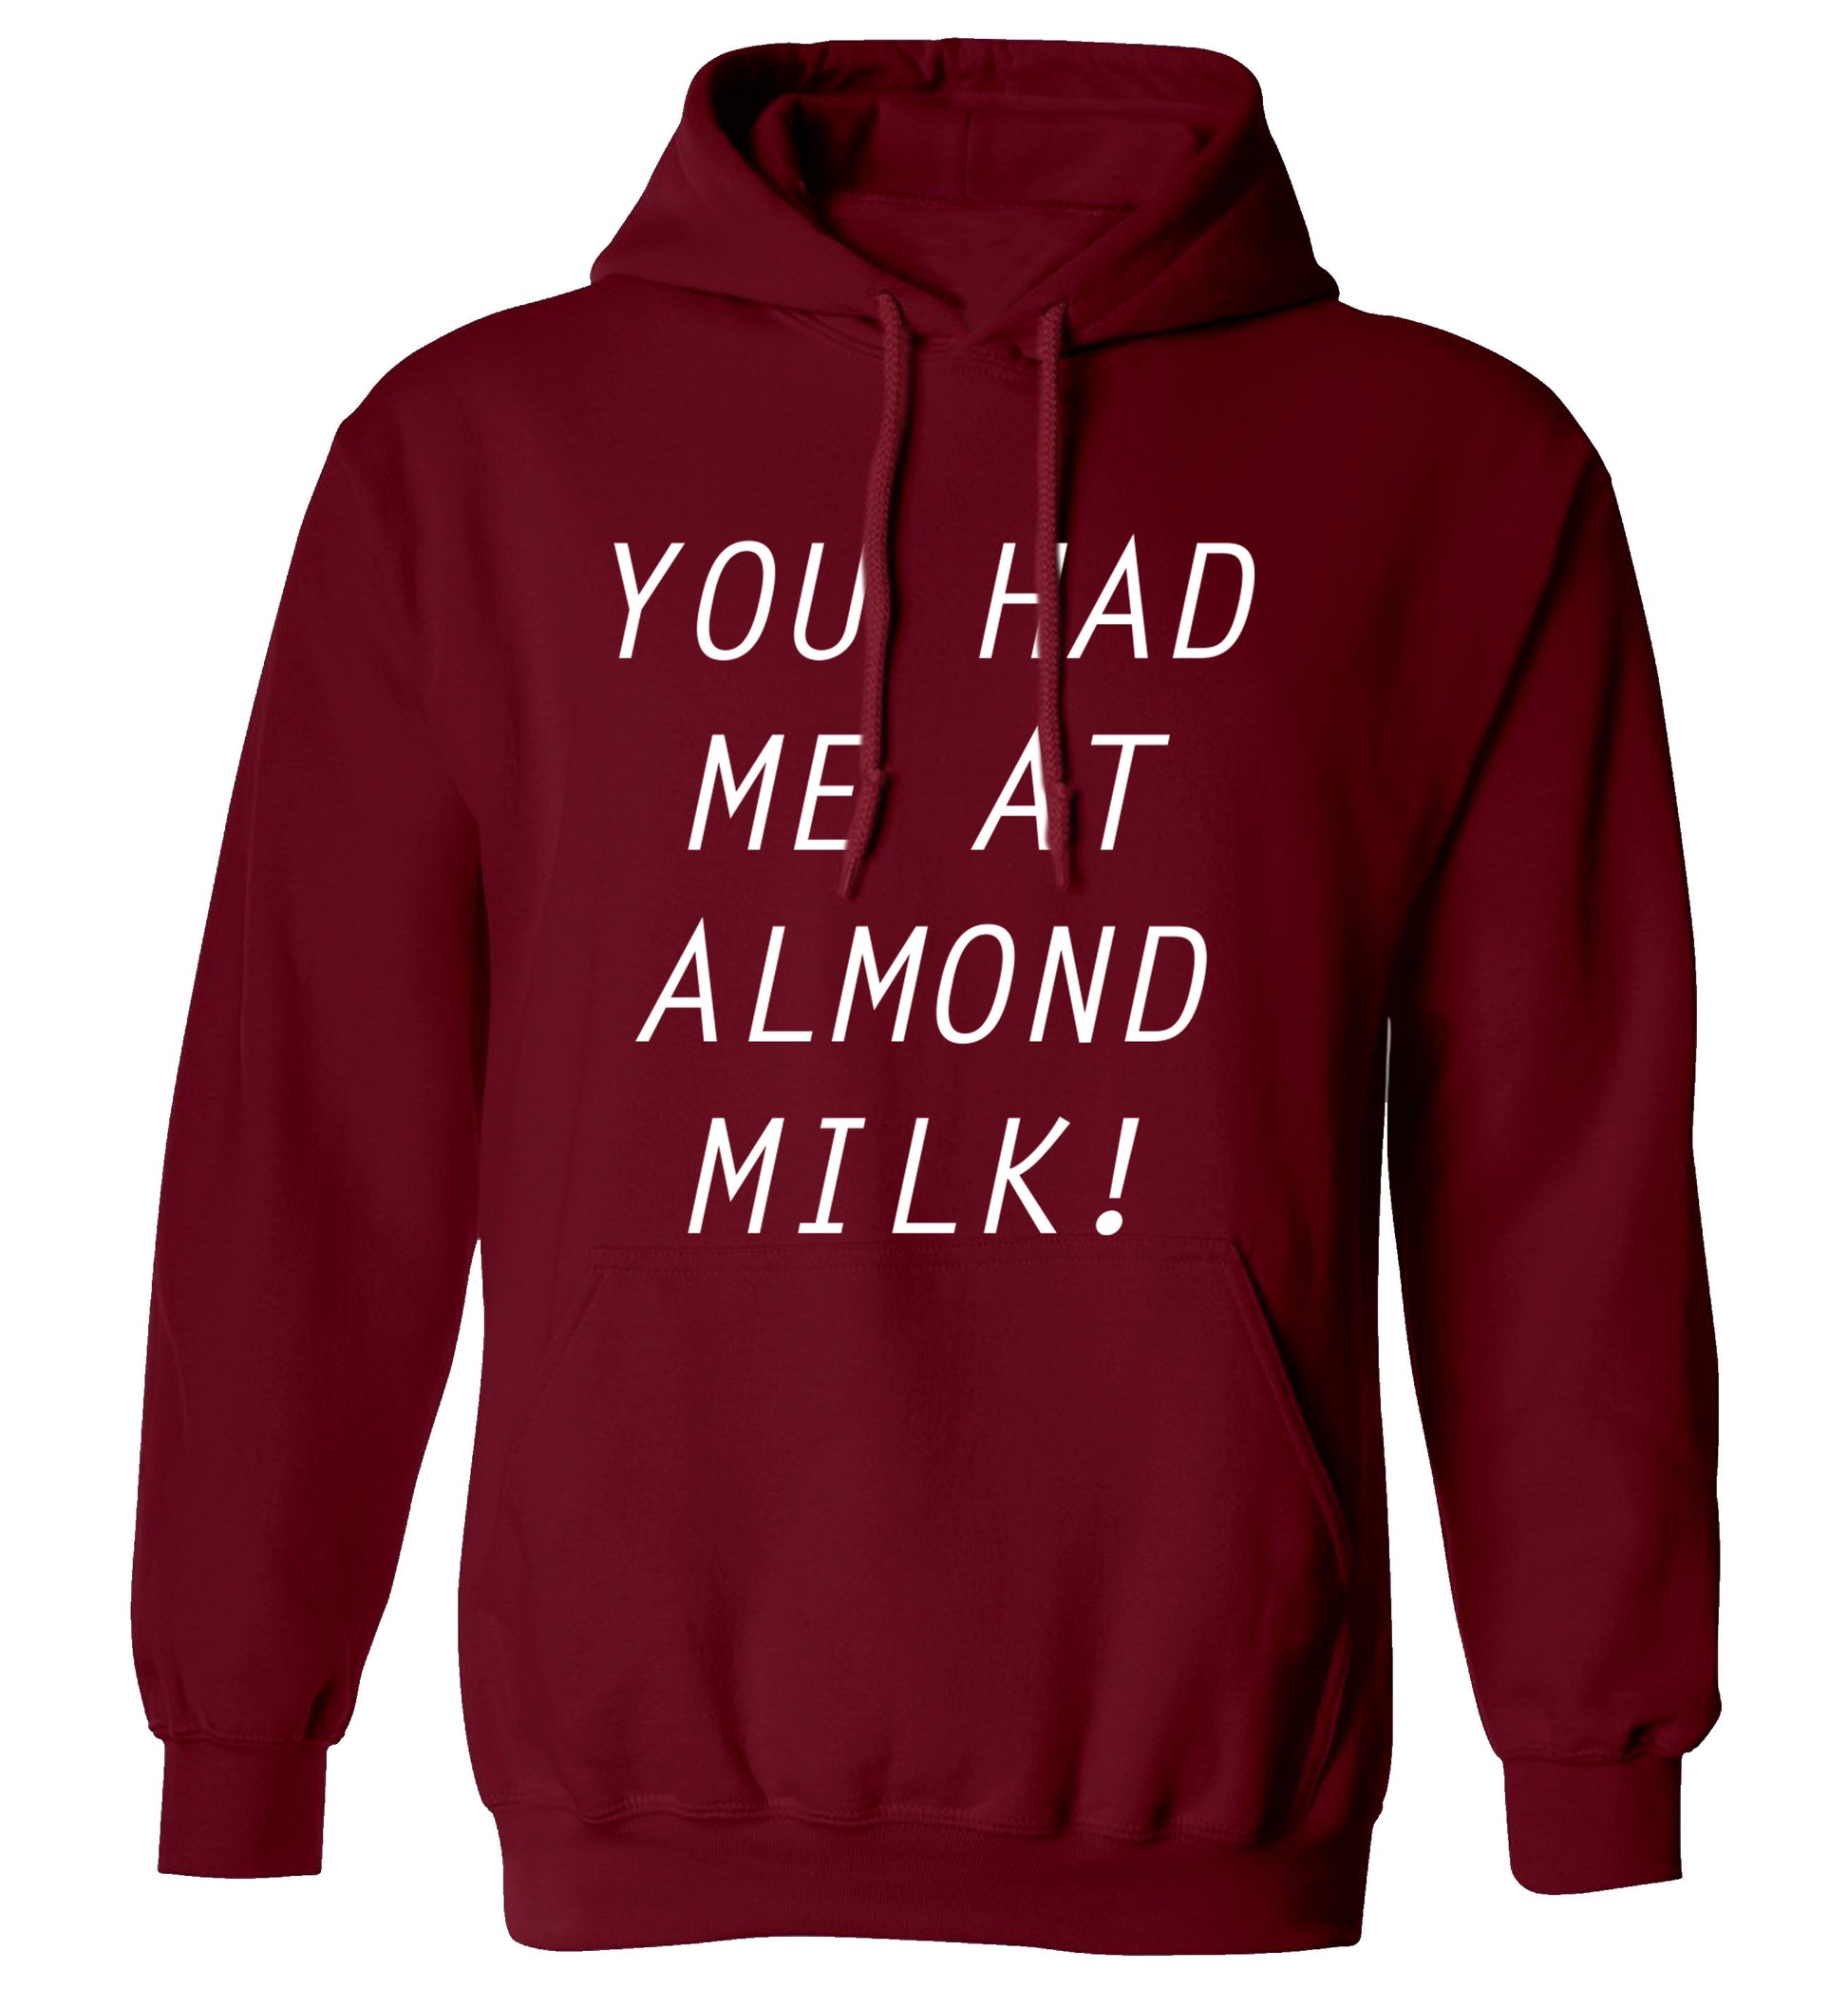 You had me at almond milk adults unisex maroon hoodie 2XL